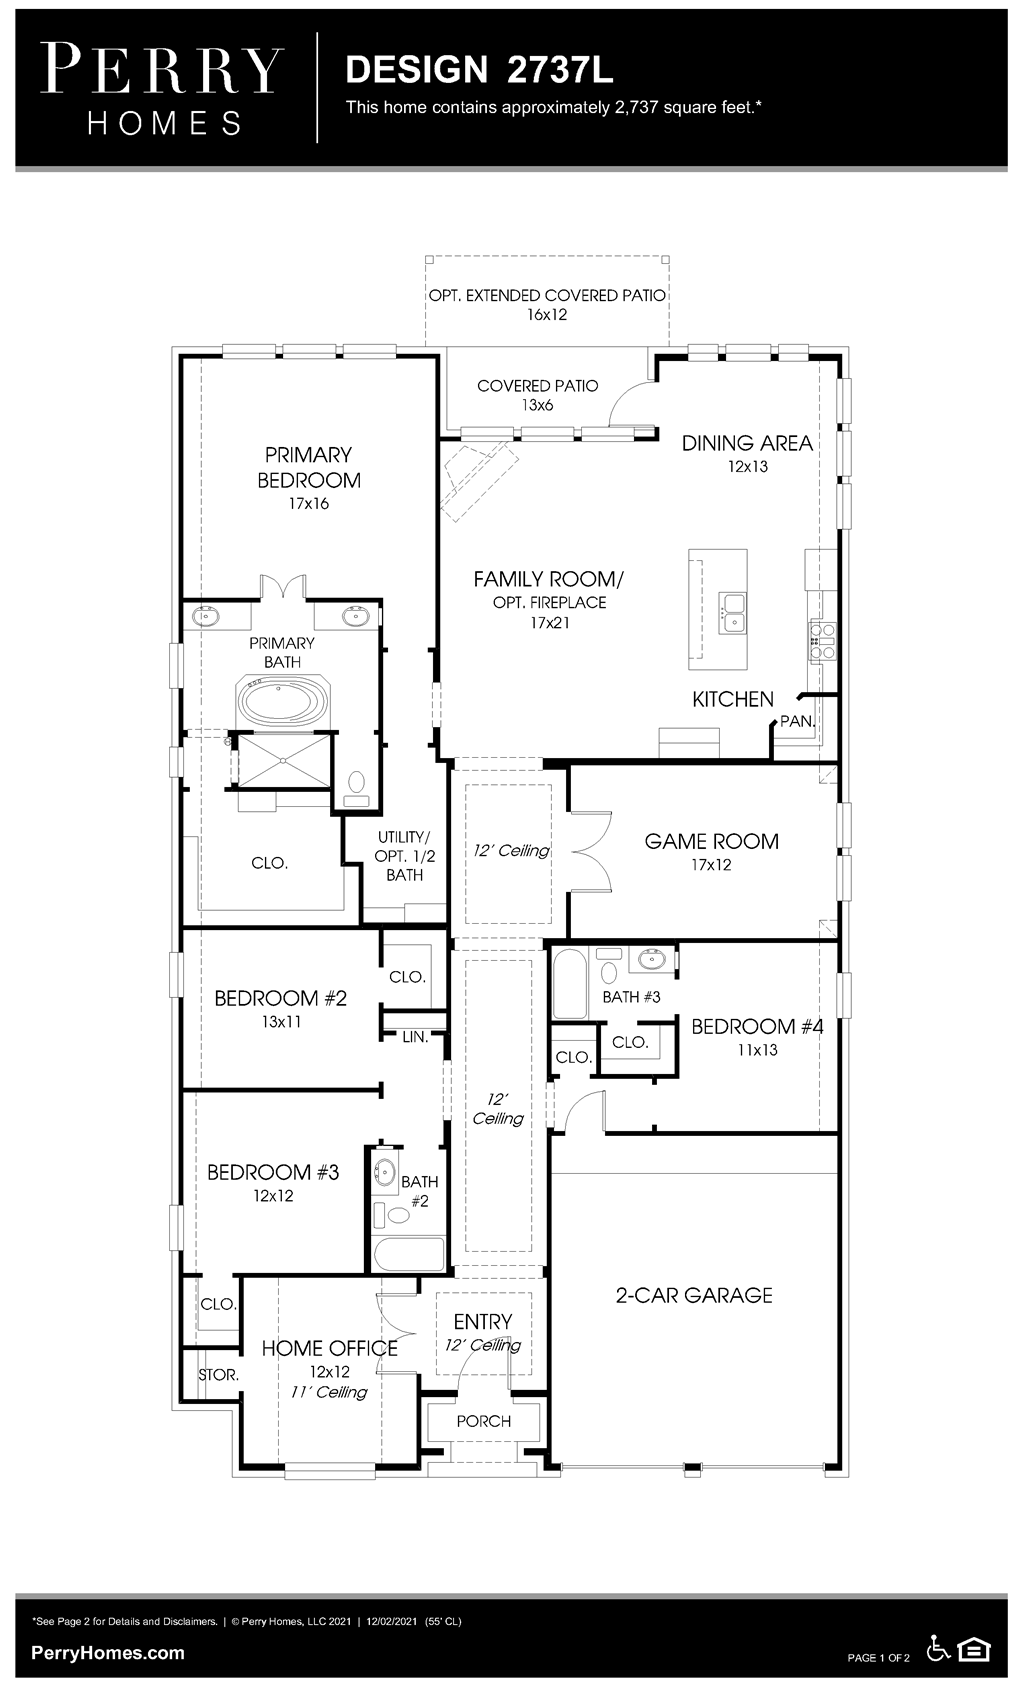 Floor Plan for 2737L